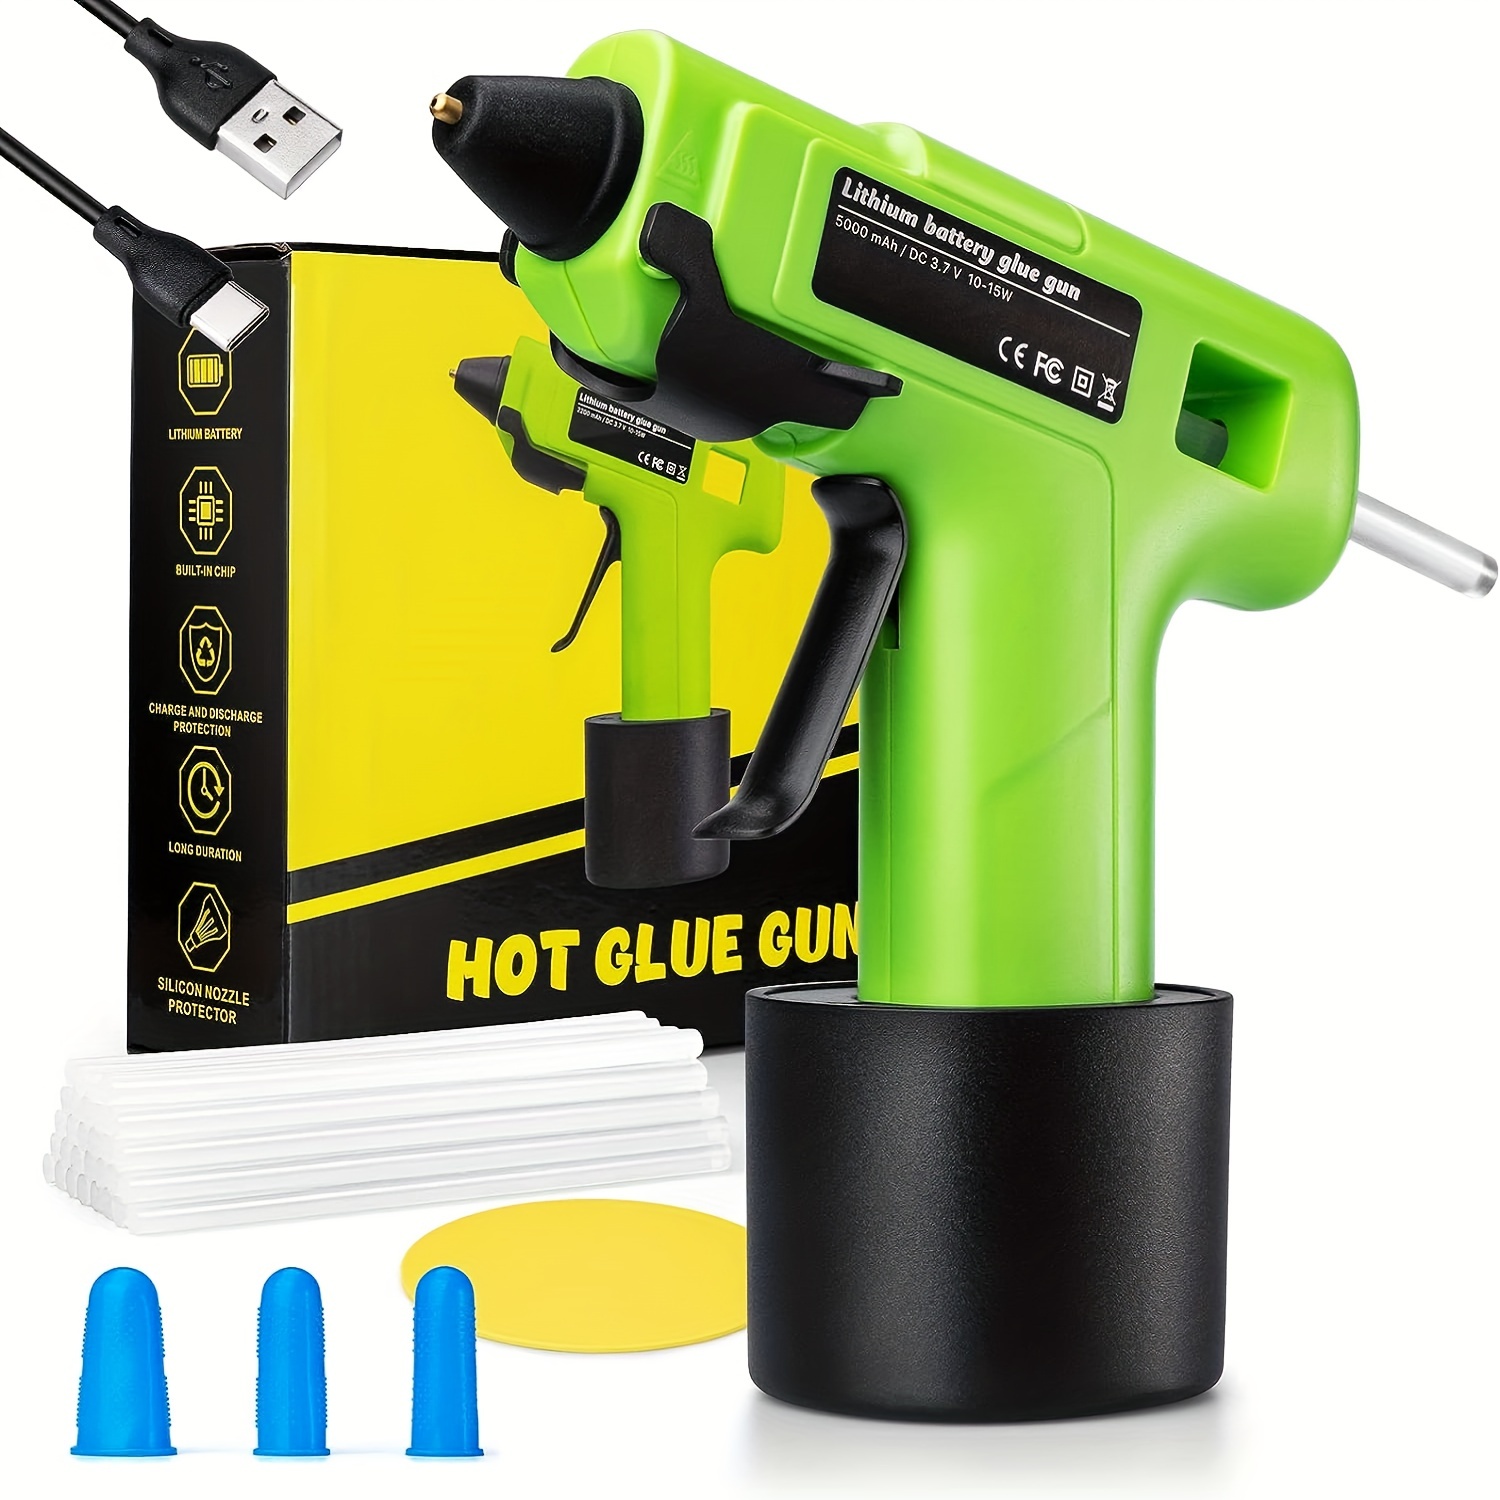 Glue Gun, Cordless Glue Gun USB Rechargeable Fast Preheating Hot Glue Gun,  Mini Hot Glue Gun Kit with 30pcs Hot Glue Sticks&3 Finger Protectors for  DIY Crafts, Arts Decoration, Home Repairs